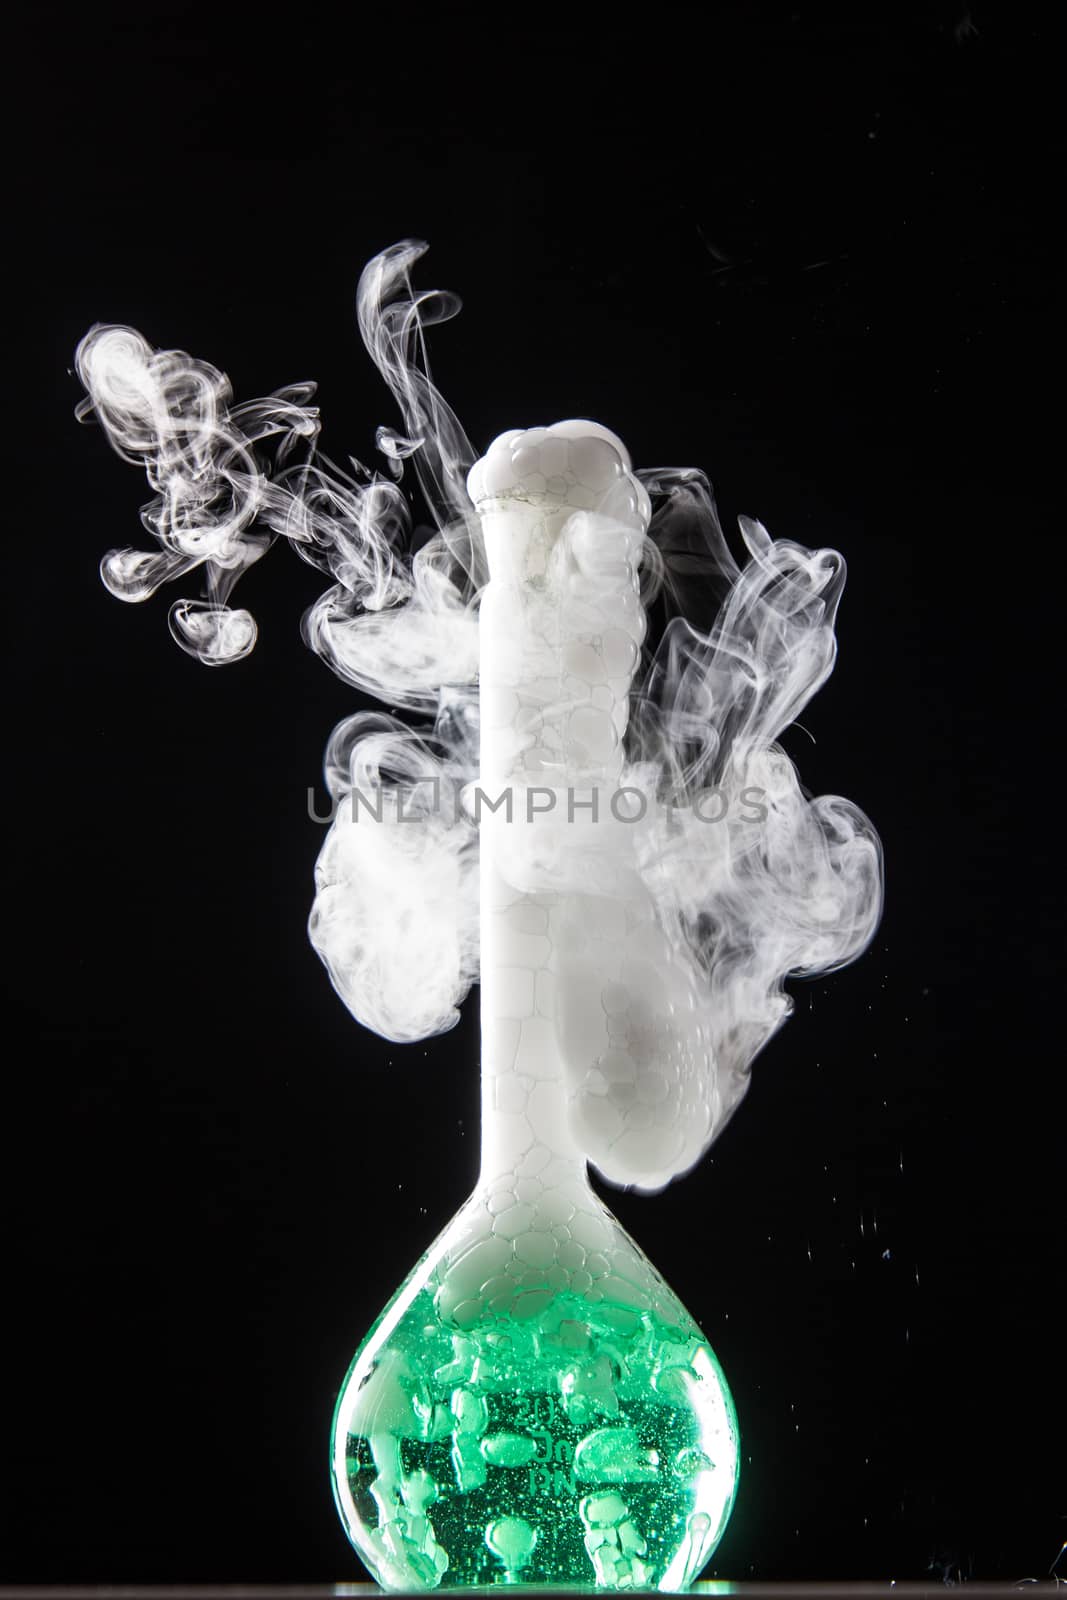 Chemical reaction in volumetric flask glass in labolatory - studio shoot